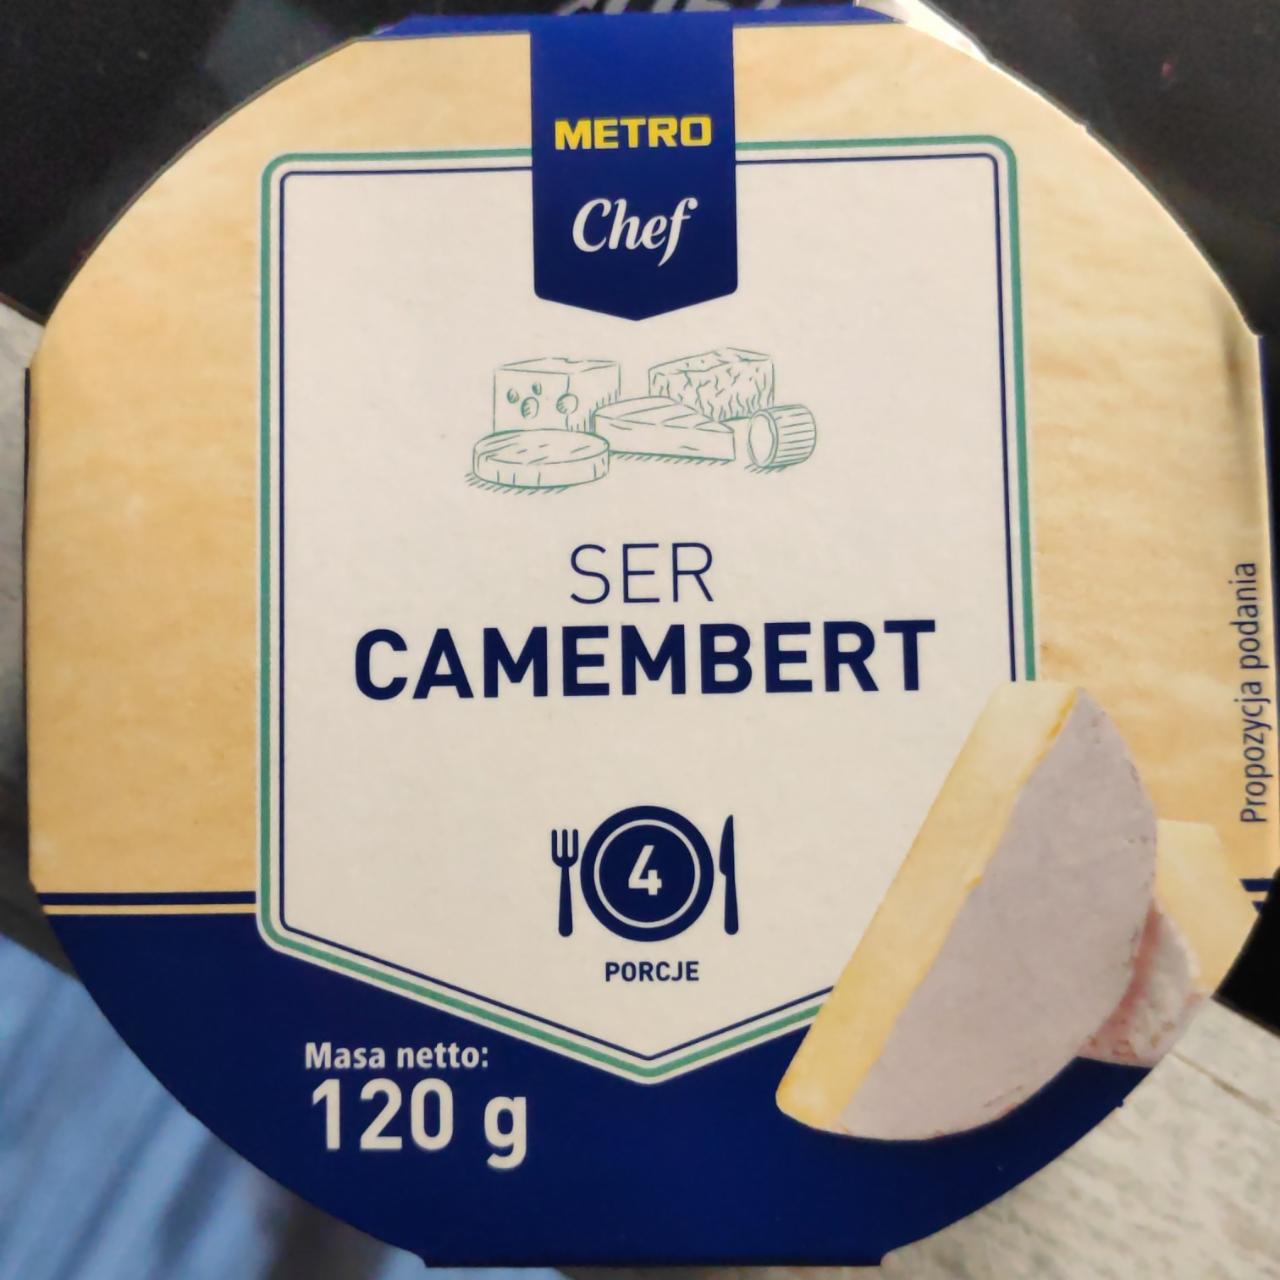 Zdjęcia - ser camembert metro chef